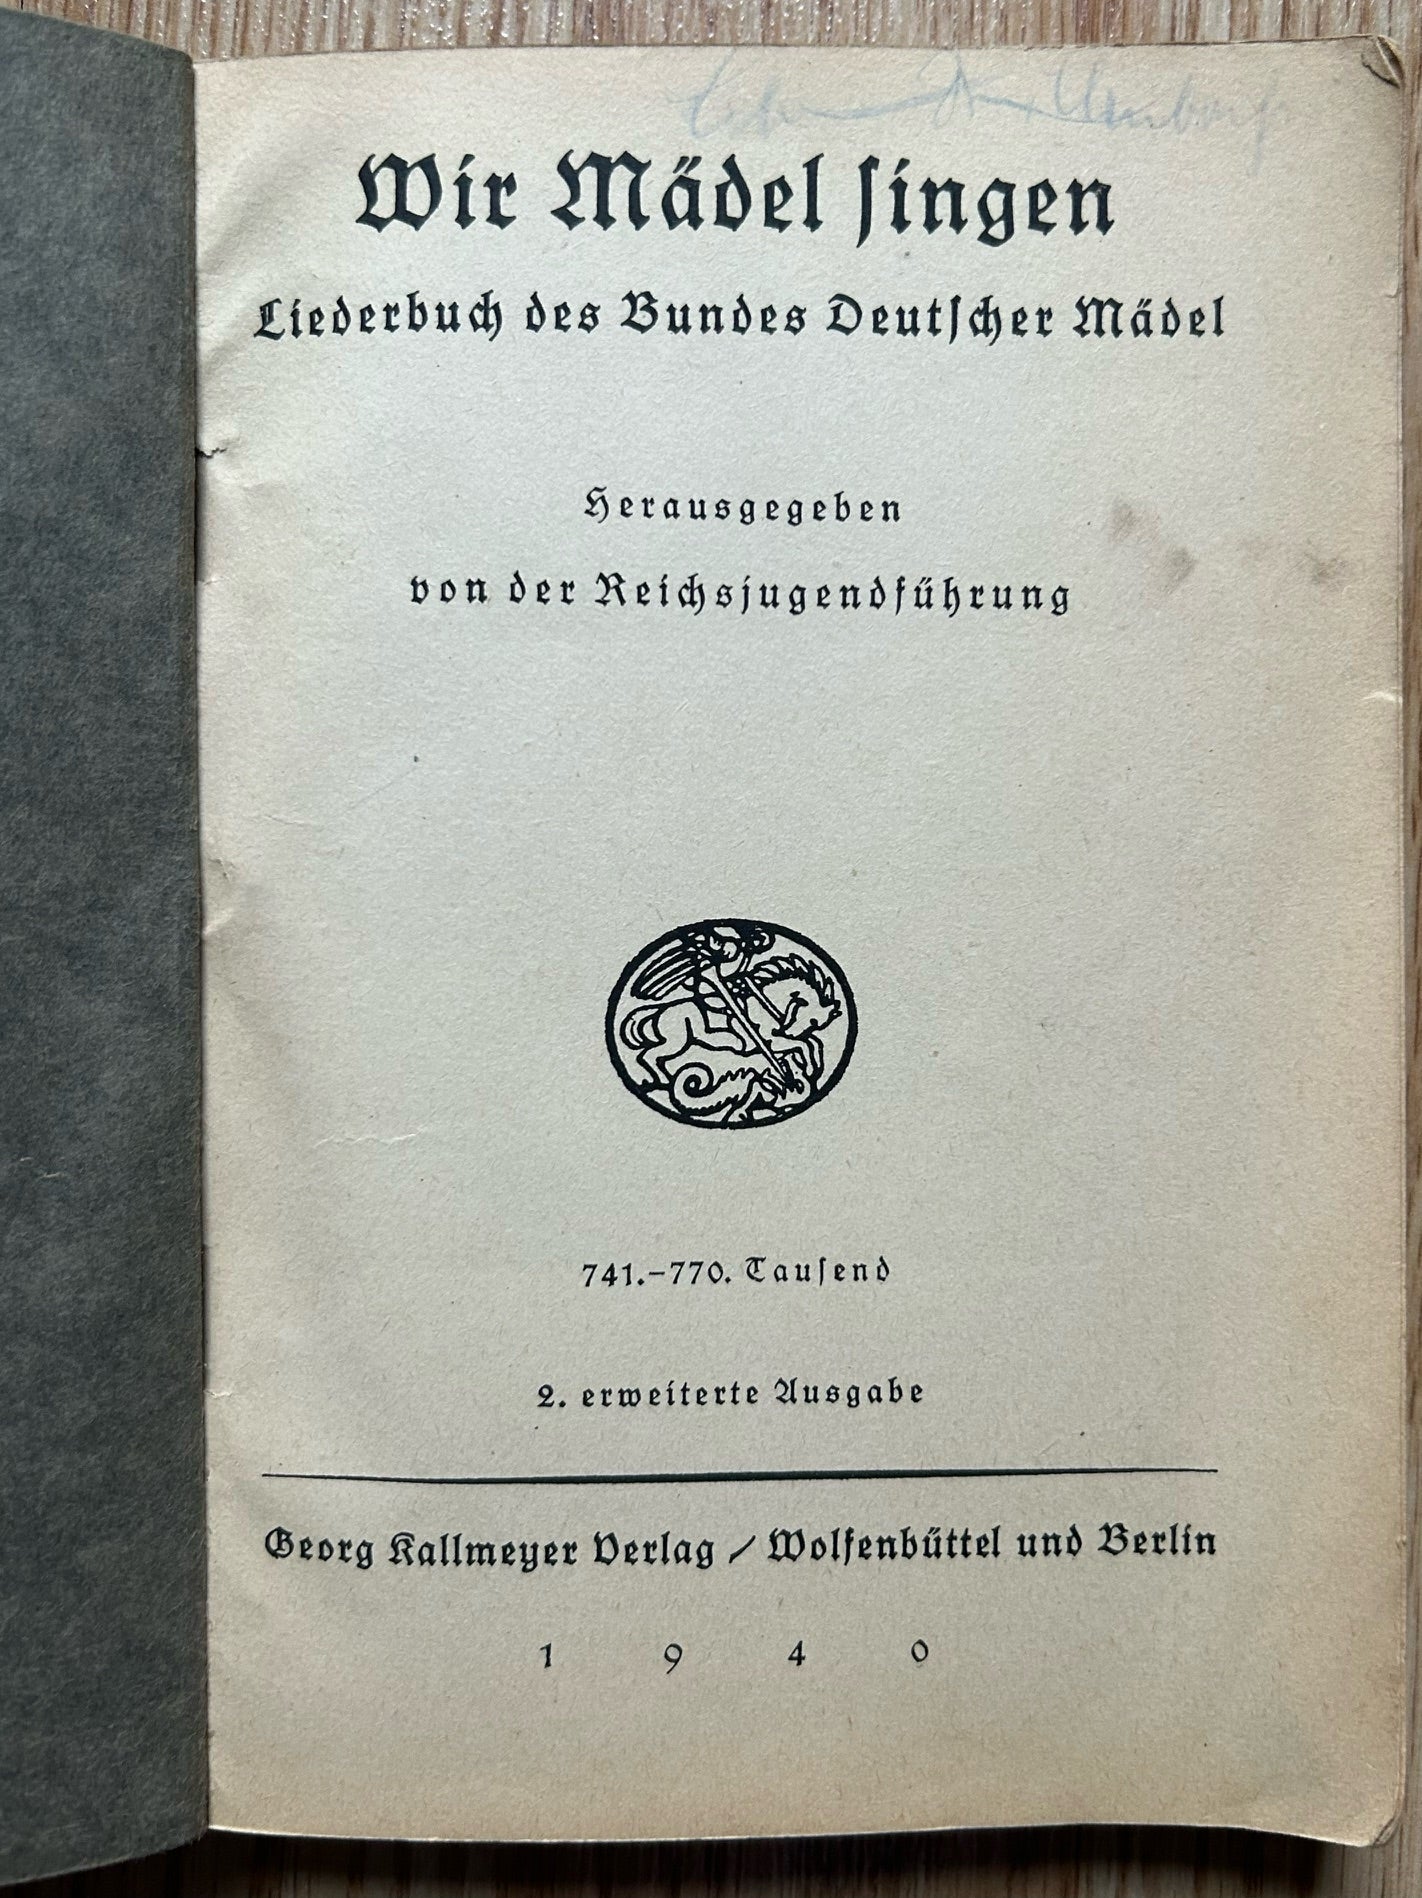 Wir Mädel Singen - BDM / Hitler Youth song book